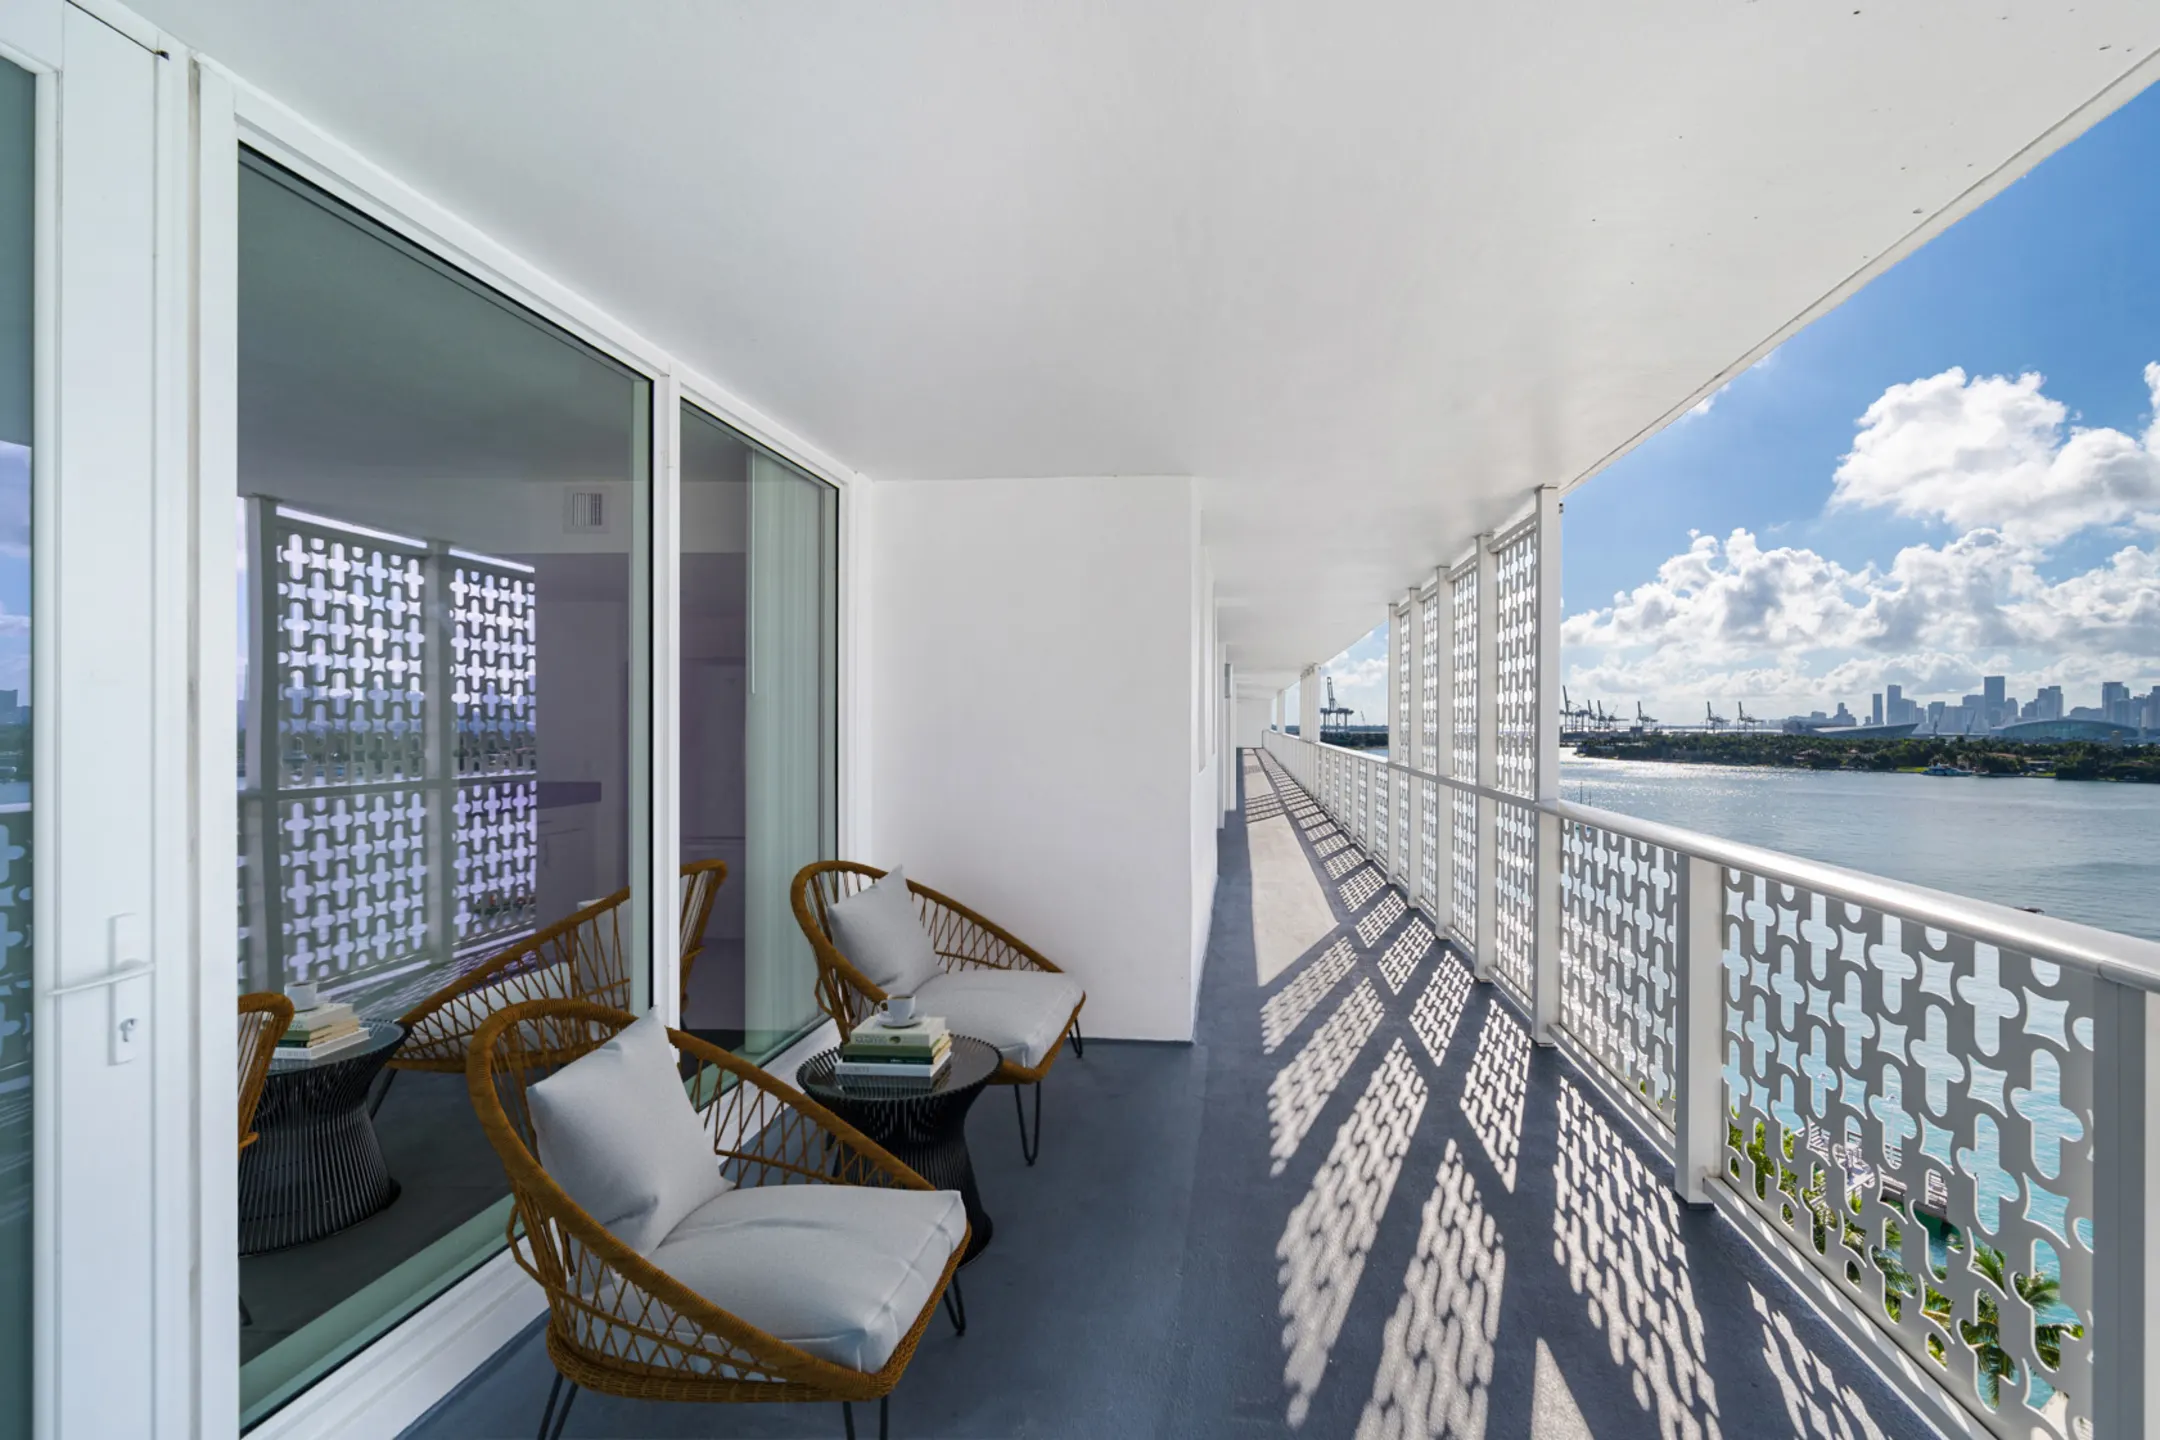 Patio / Deck - Southgate Towers - Miami Beach, FL